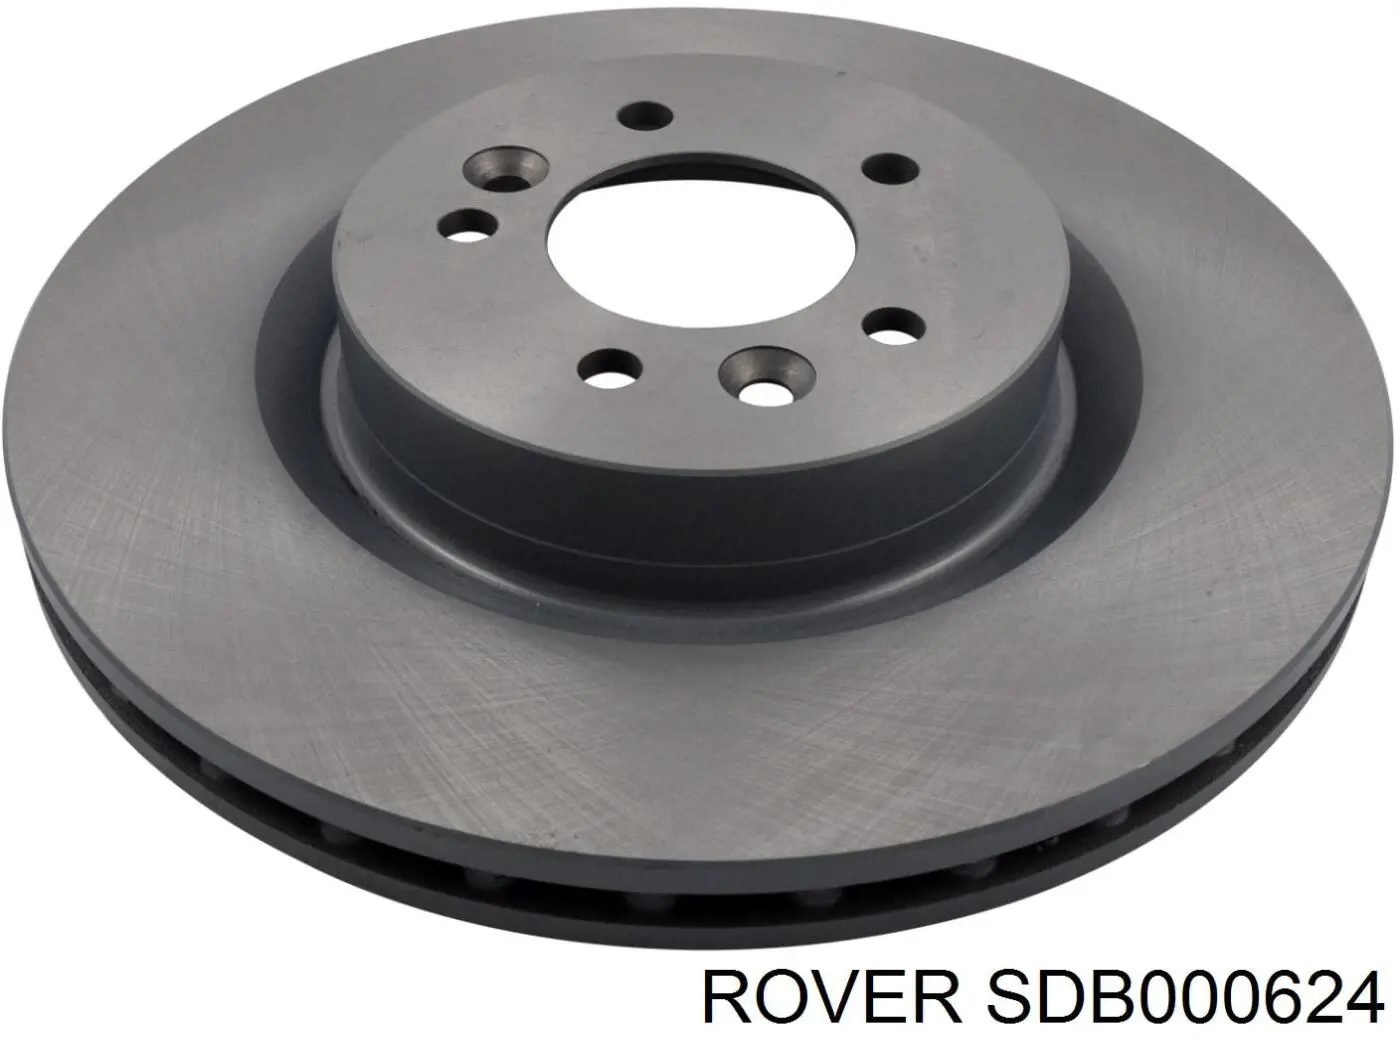 SDB000624 Rover disco de freno delantero